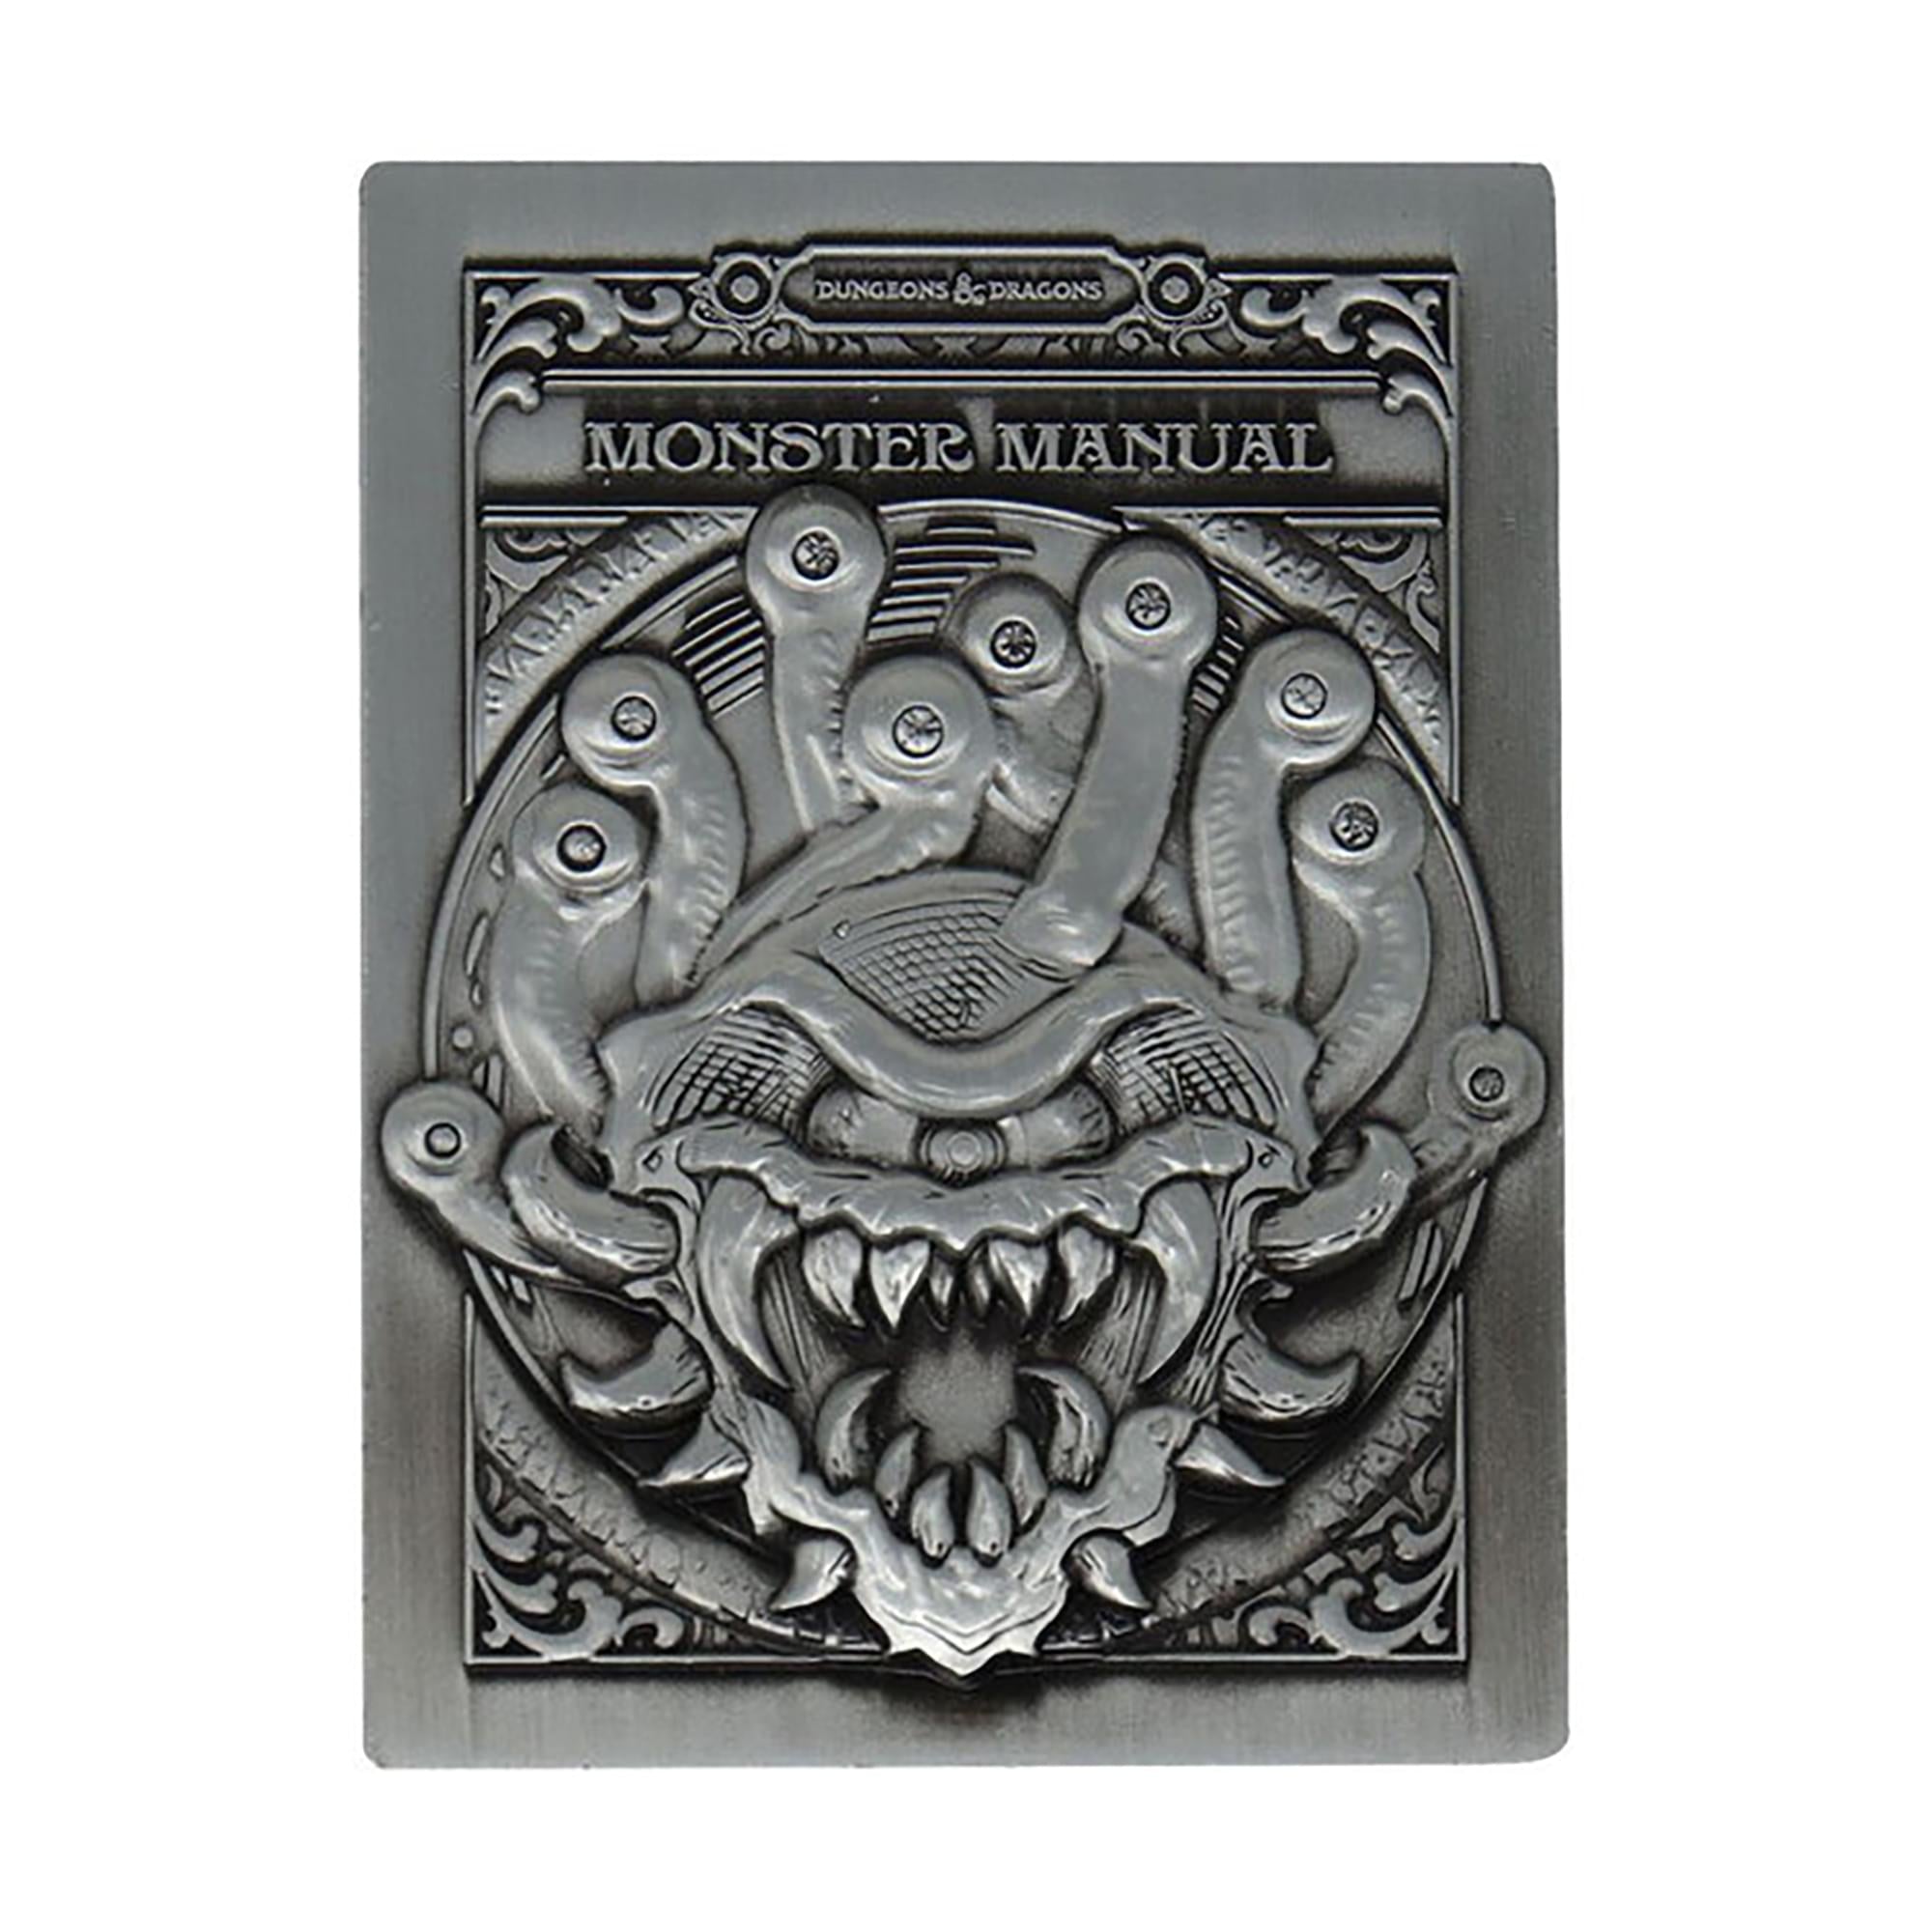 Dungeons & Dragons Monster Manual Limited Edition Metal Ingot